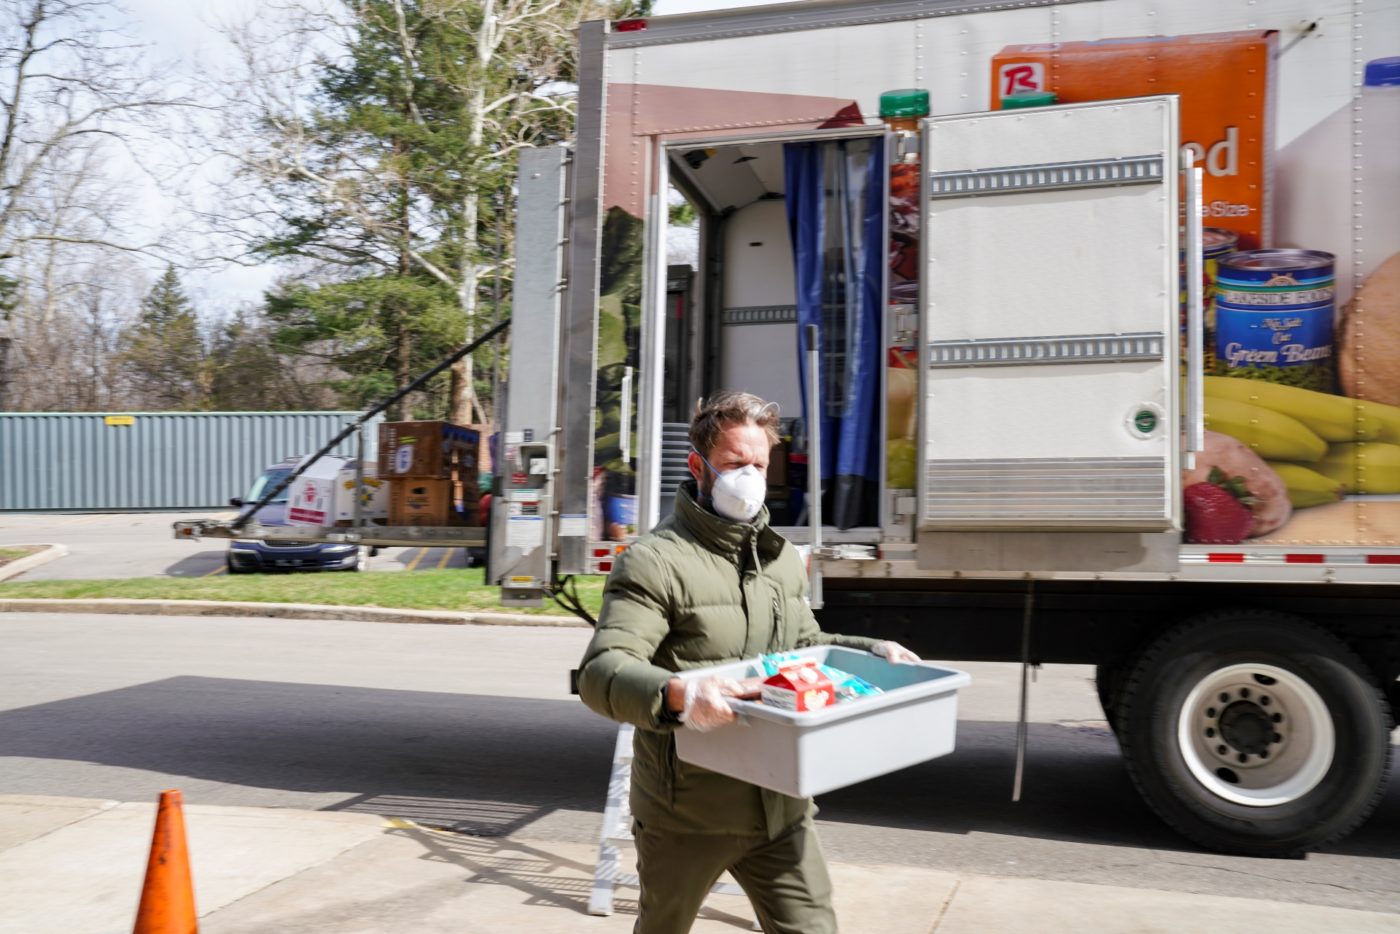 Volunteer delivers groceries from the My Neighborhood Mobile Grocery truck.